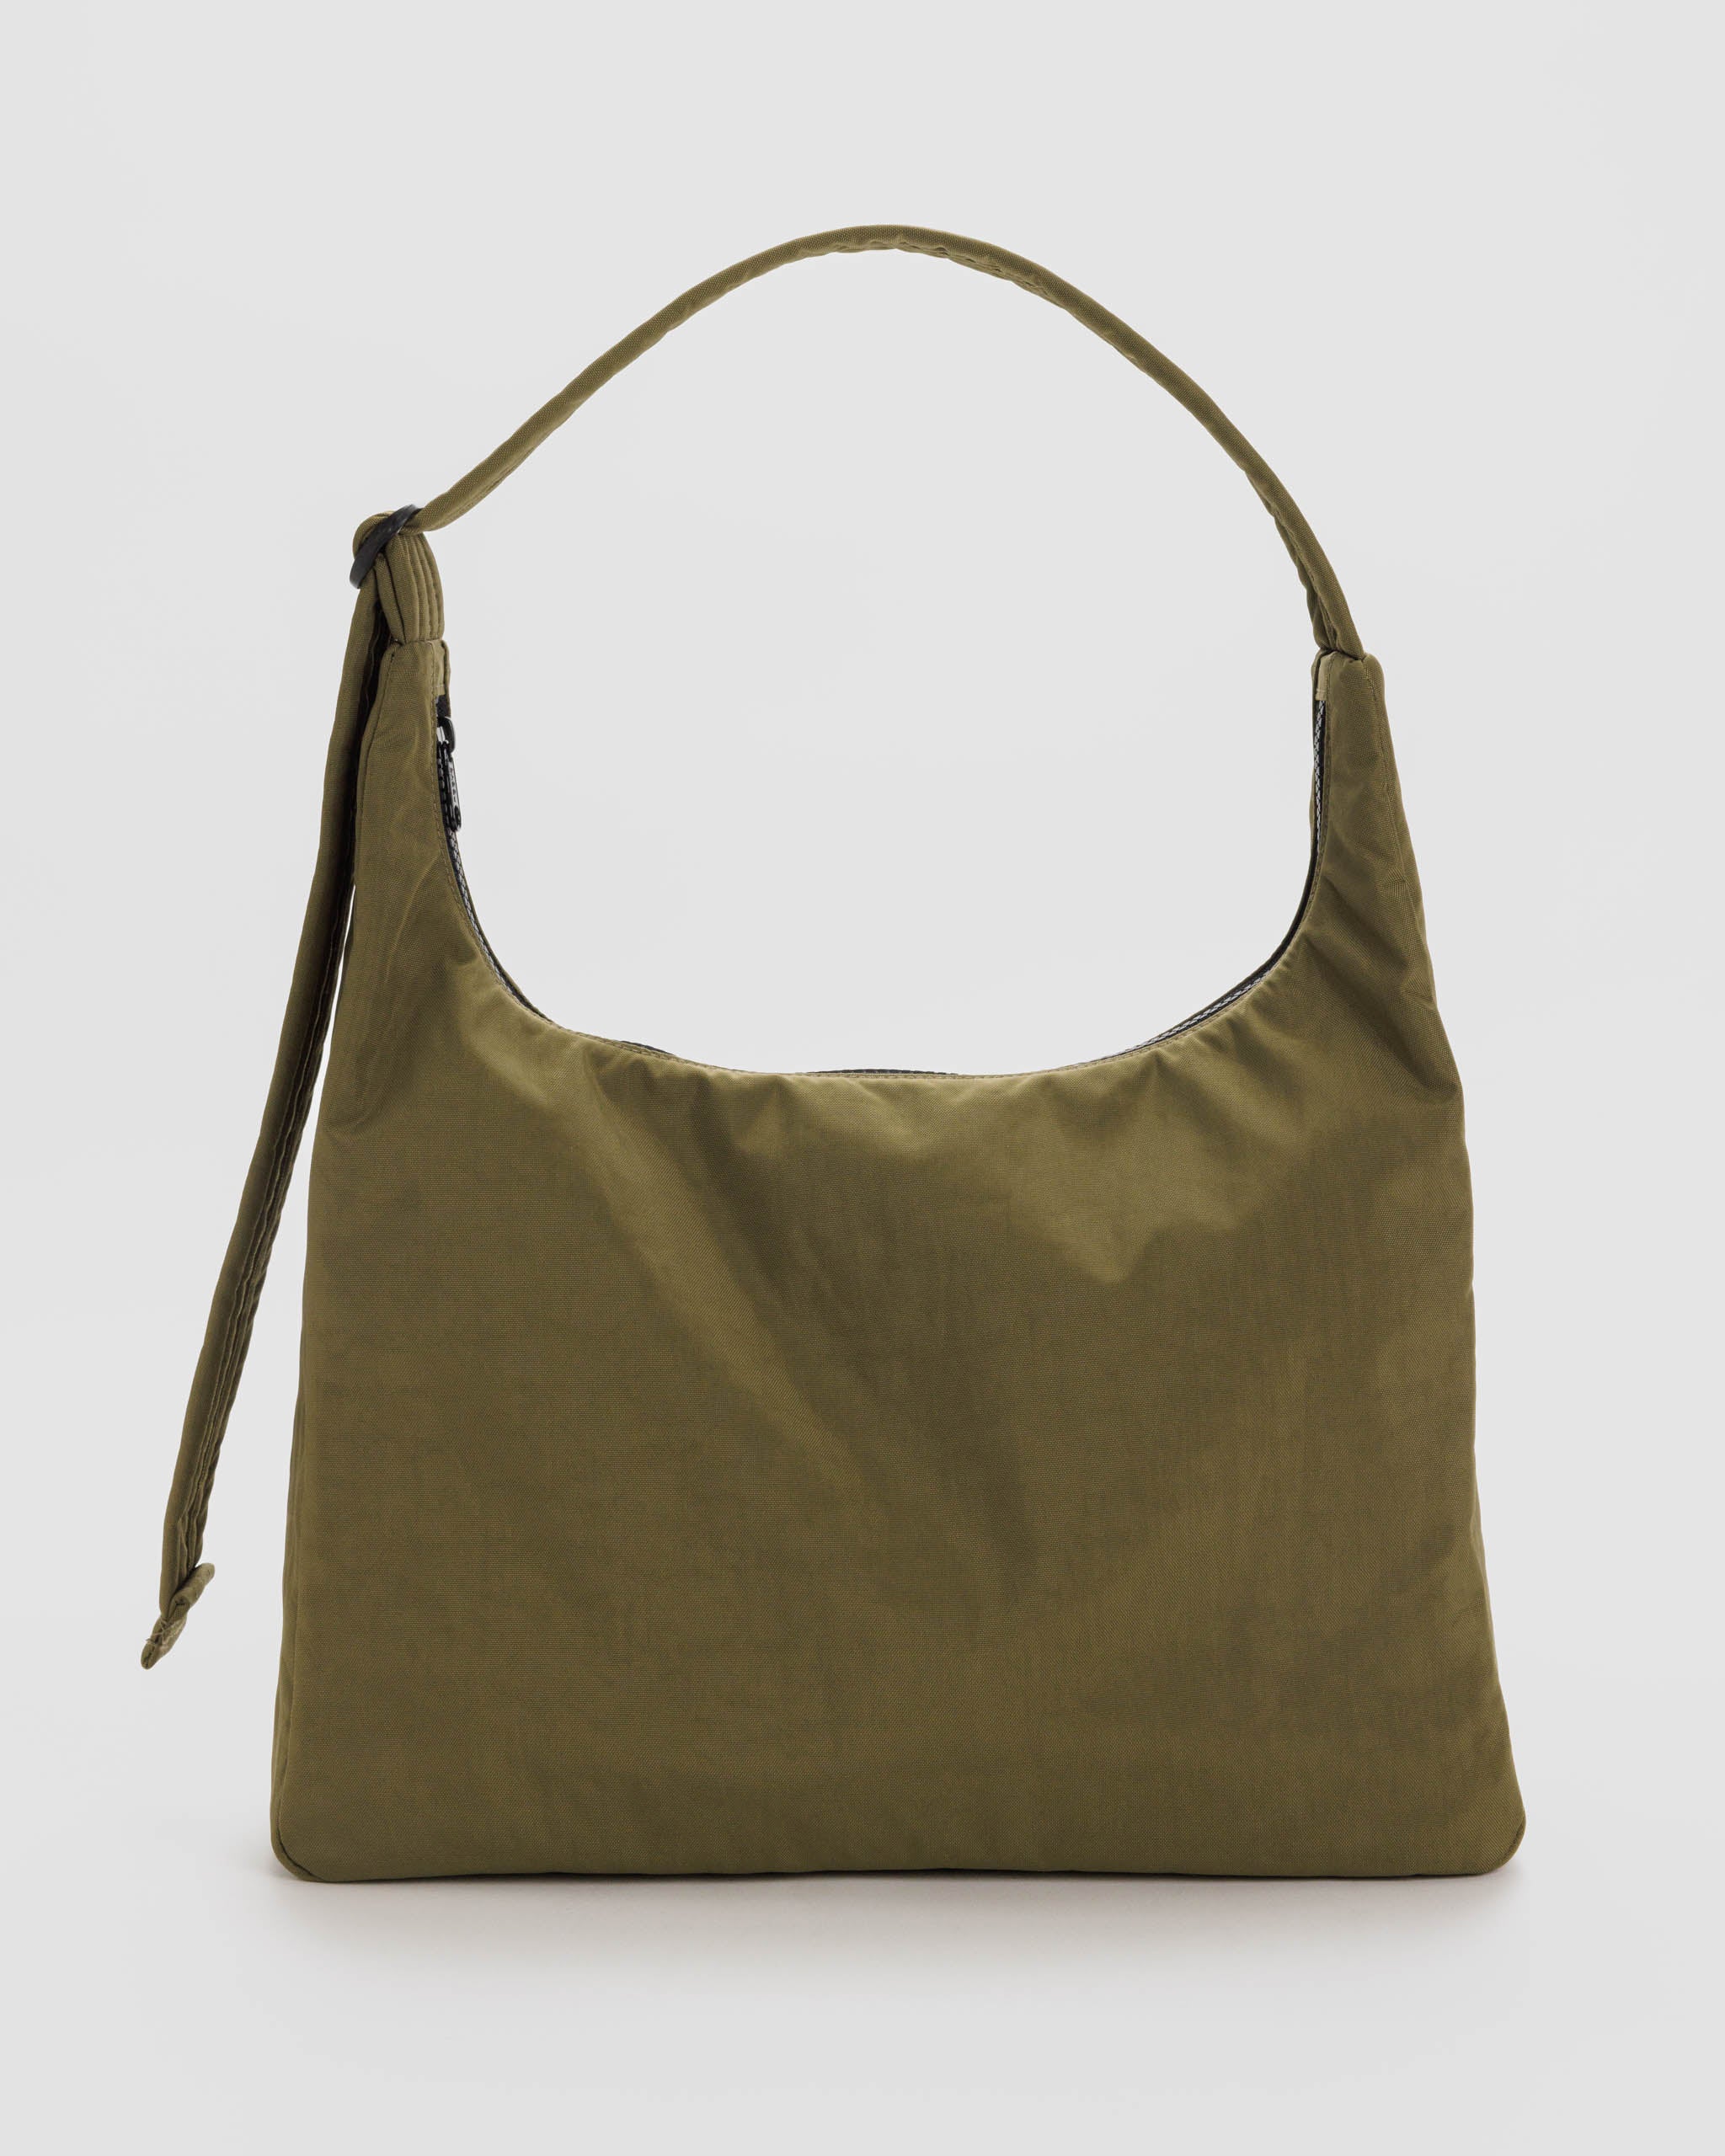 Nylon Shoulder Bag - Seaweed